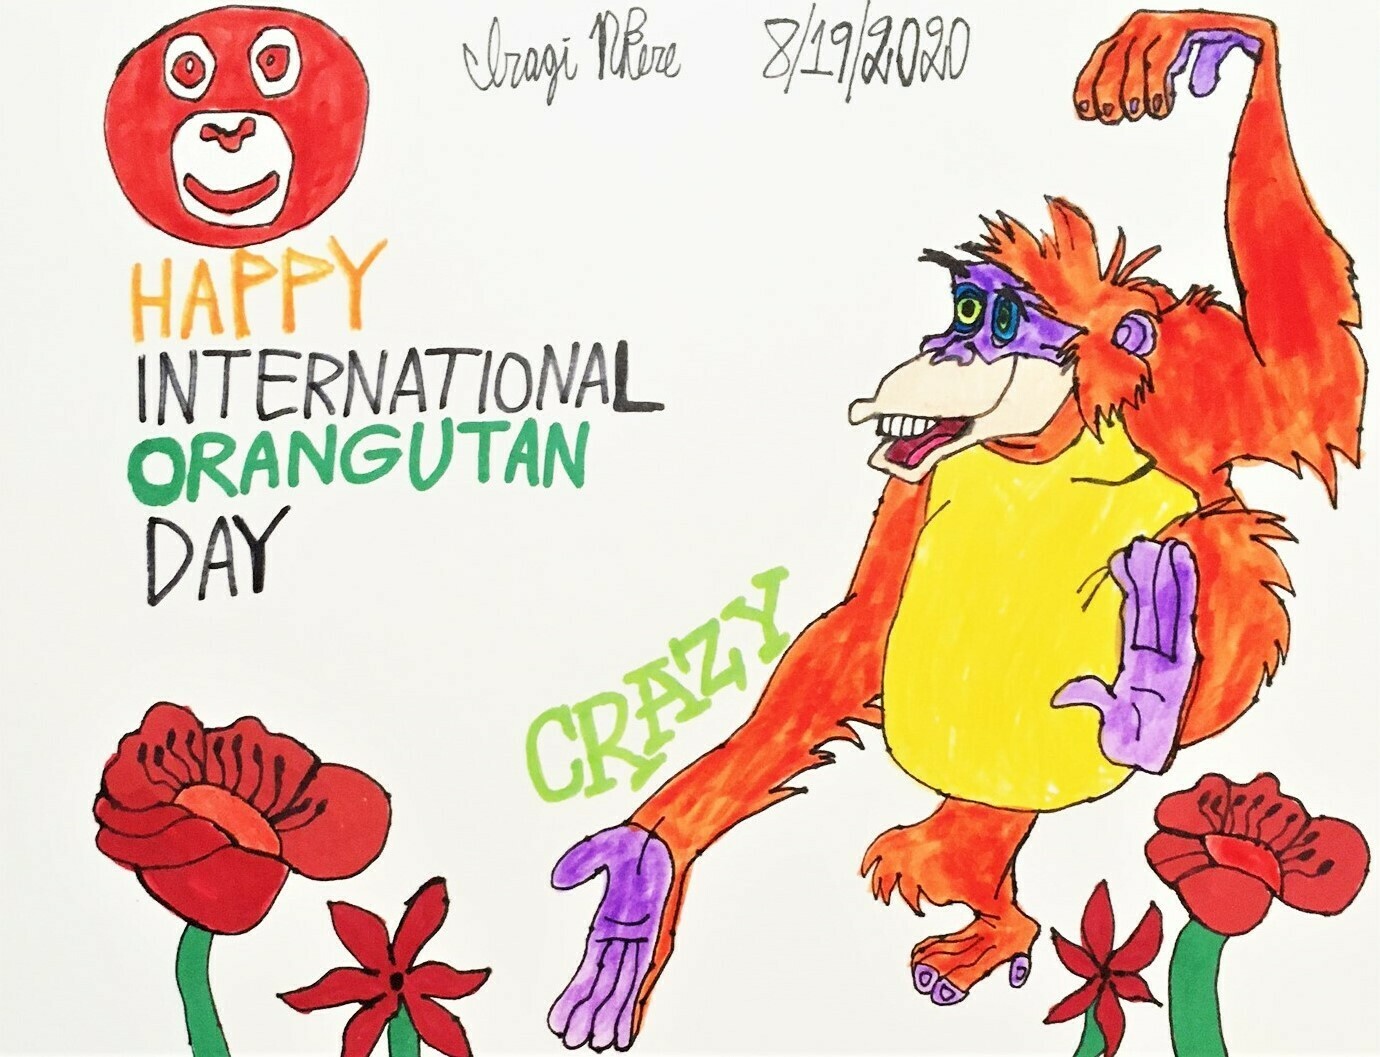 Happy International Orangutan Day